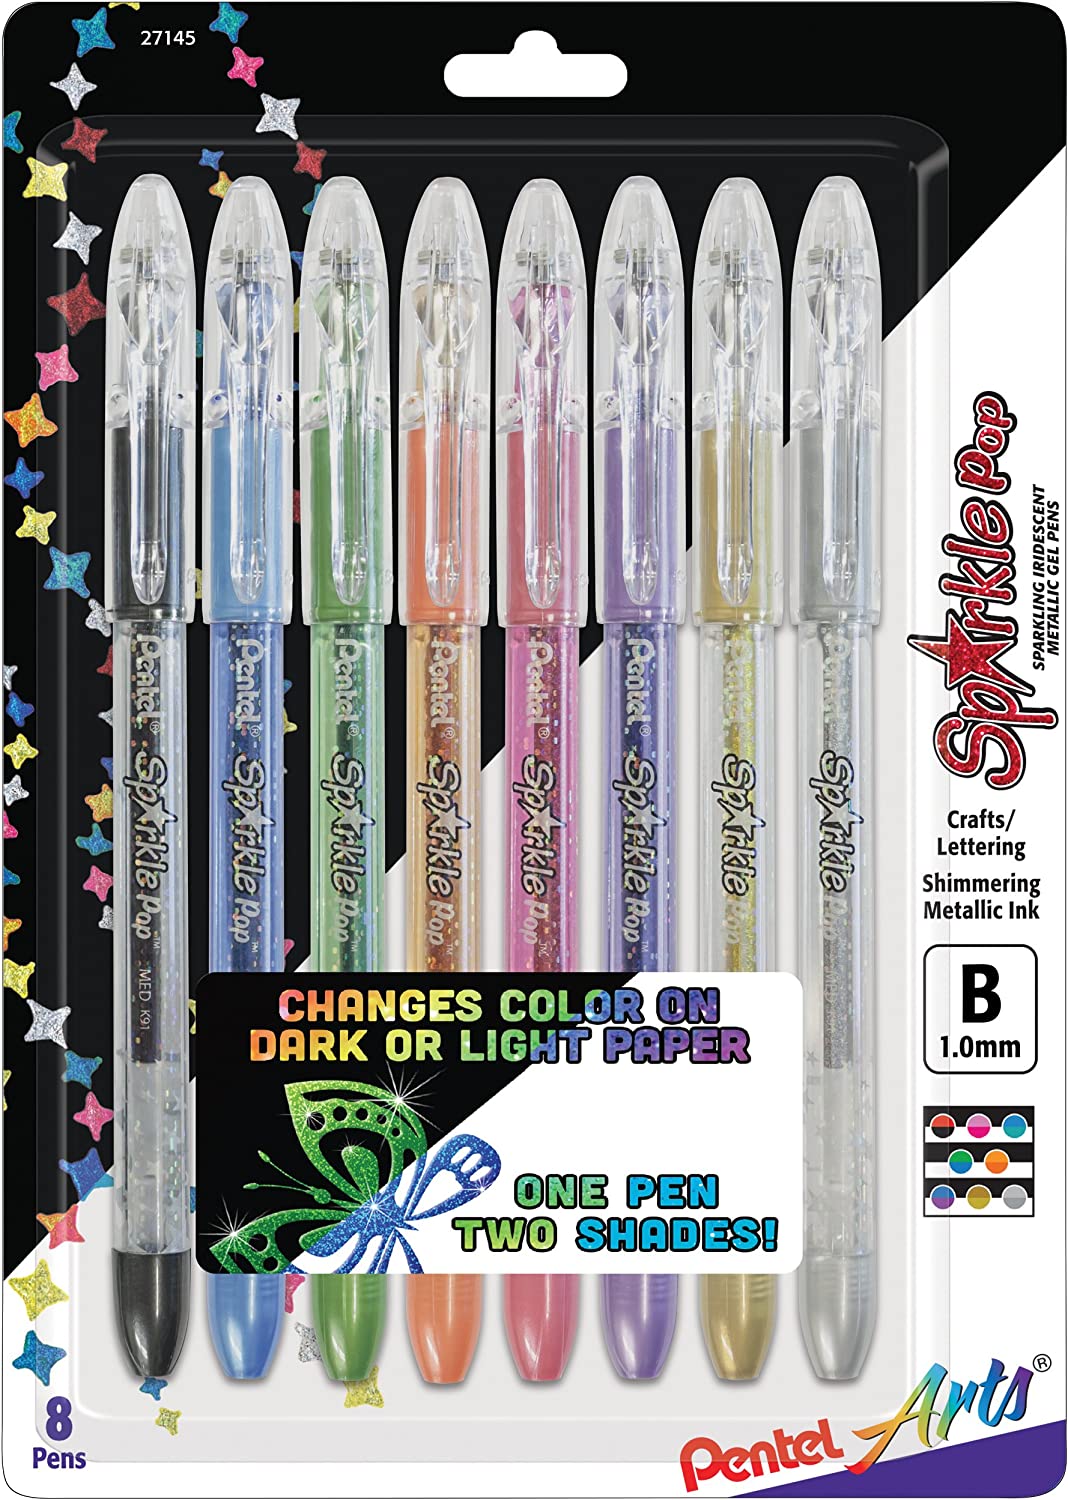 SMOOTHERPRO Glitter Gel Pens 1.0mm Metallic Vibrant Sparkle